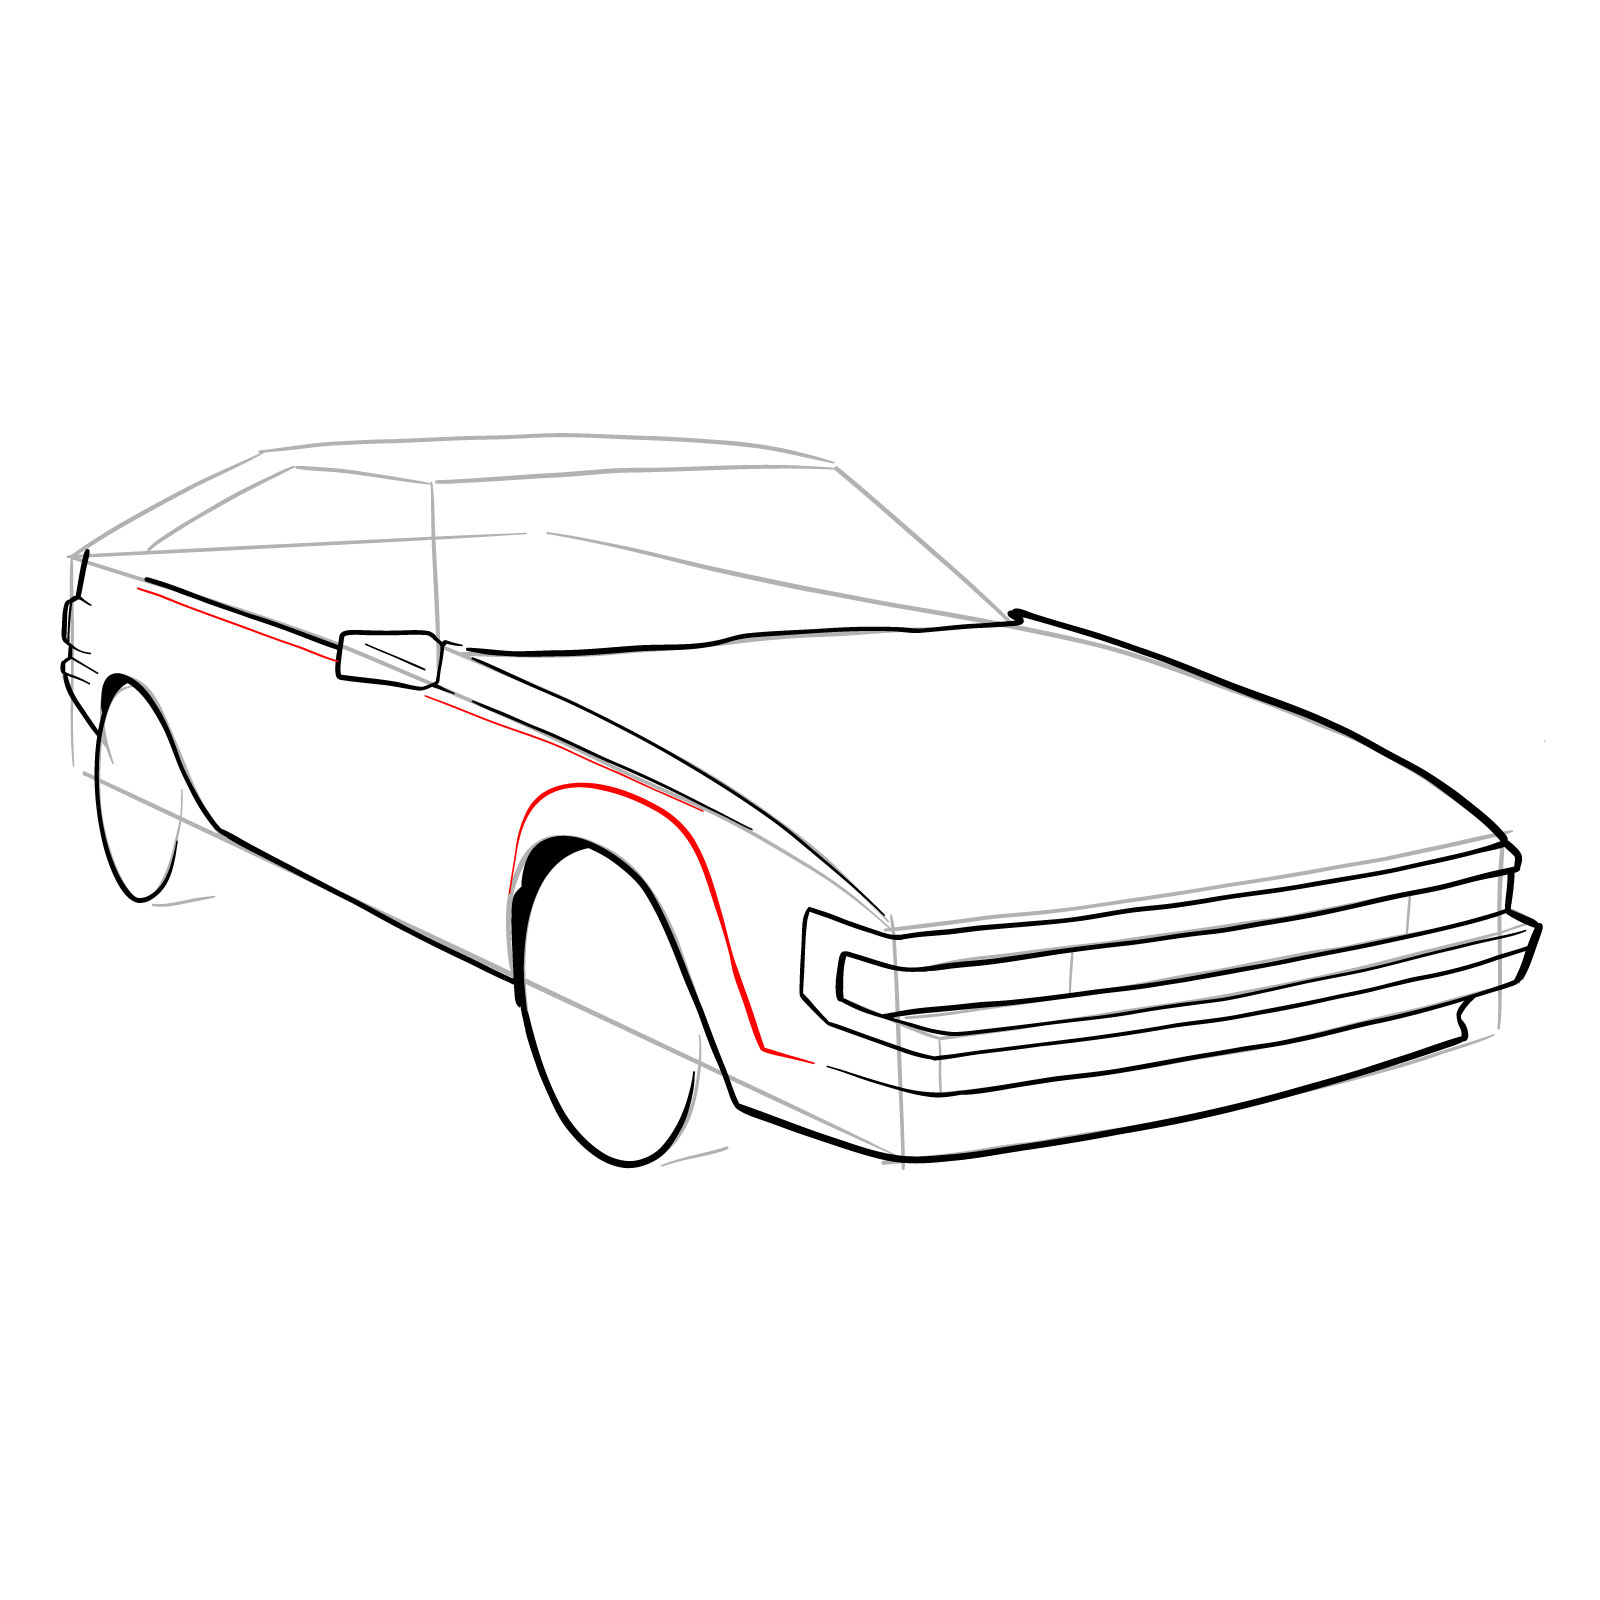 How to draw a 1985 Toyota Celica Supra P Type MK 2 - step 17